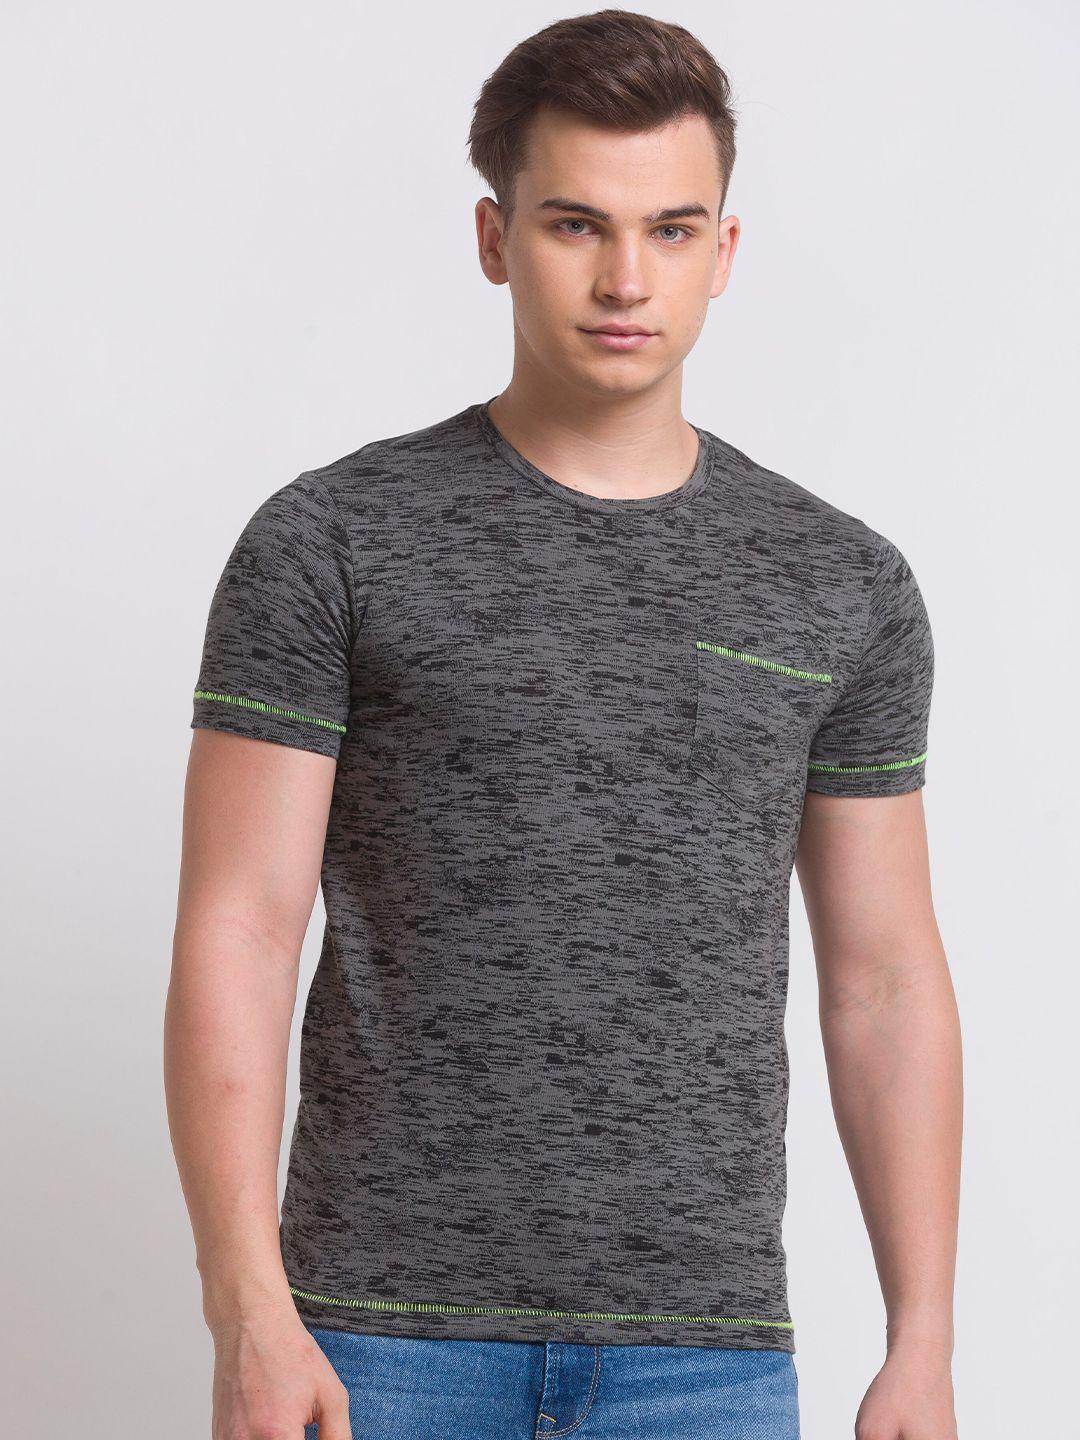 globus-men-grey-self-design-slim-fit-cotton-t-shirt